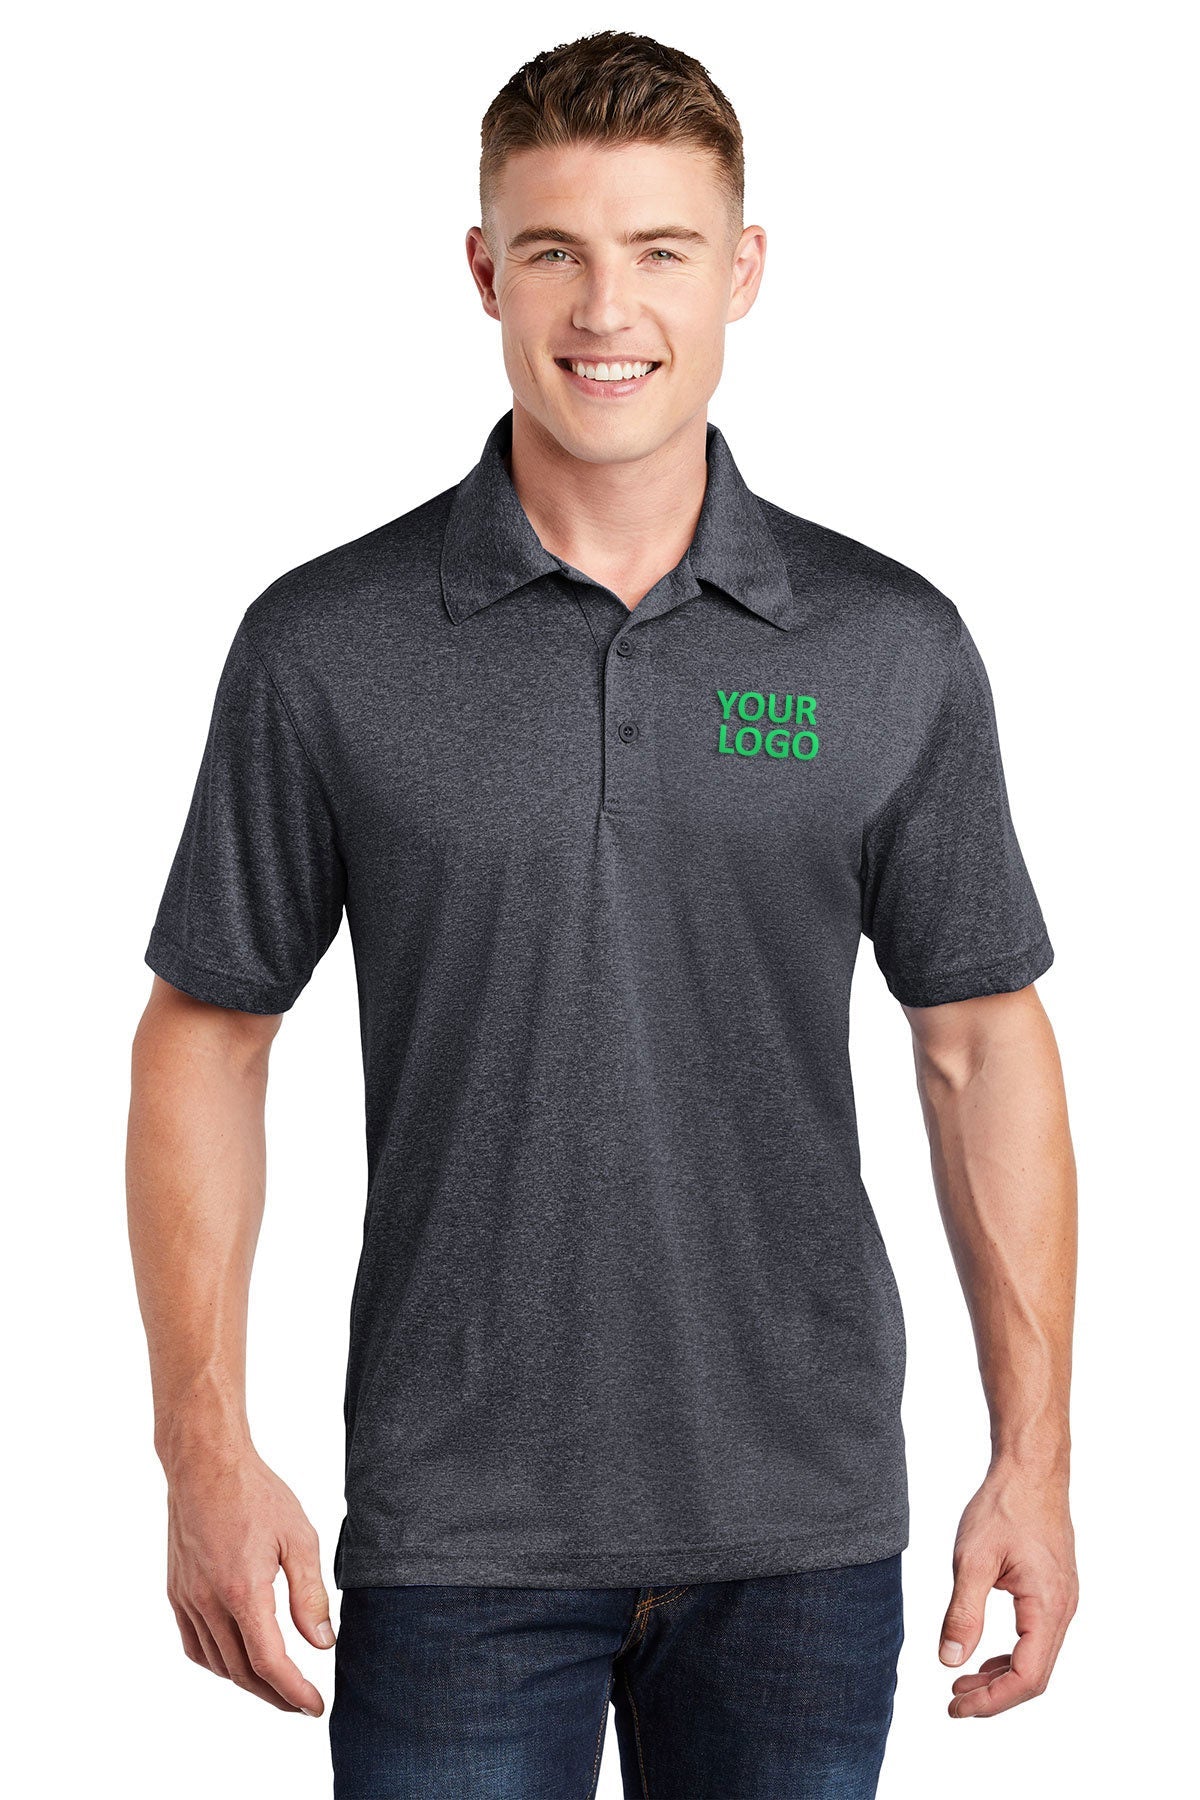 Sport-Tek Graphite Heather ST660 polo work shirts with company logo